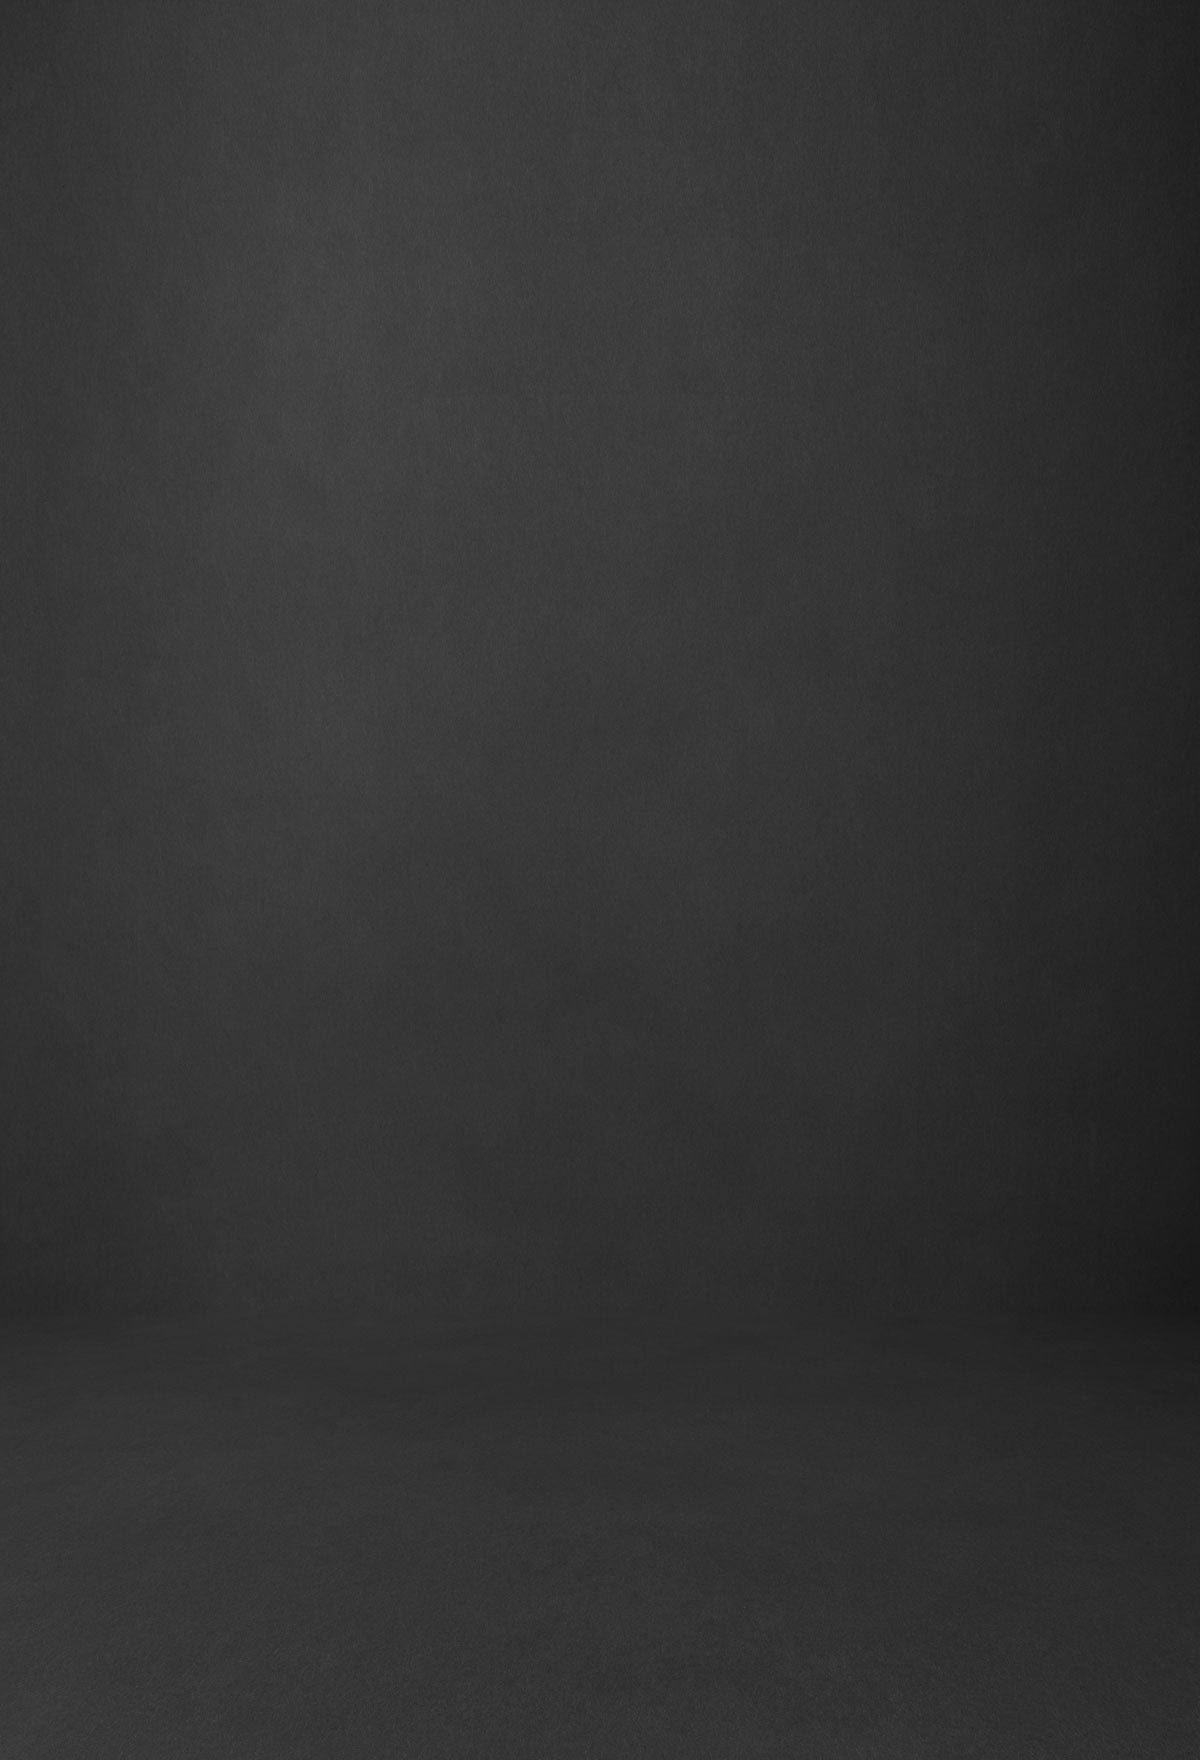 Kate Light Black Cool Color Backdrop for Portrait Photography